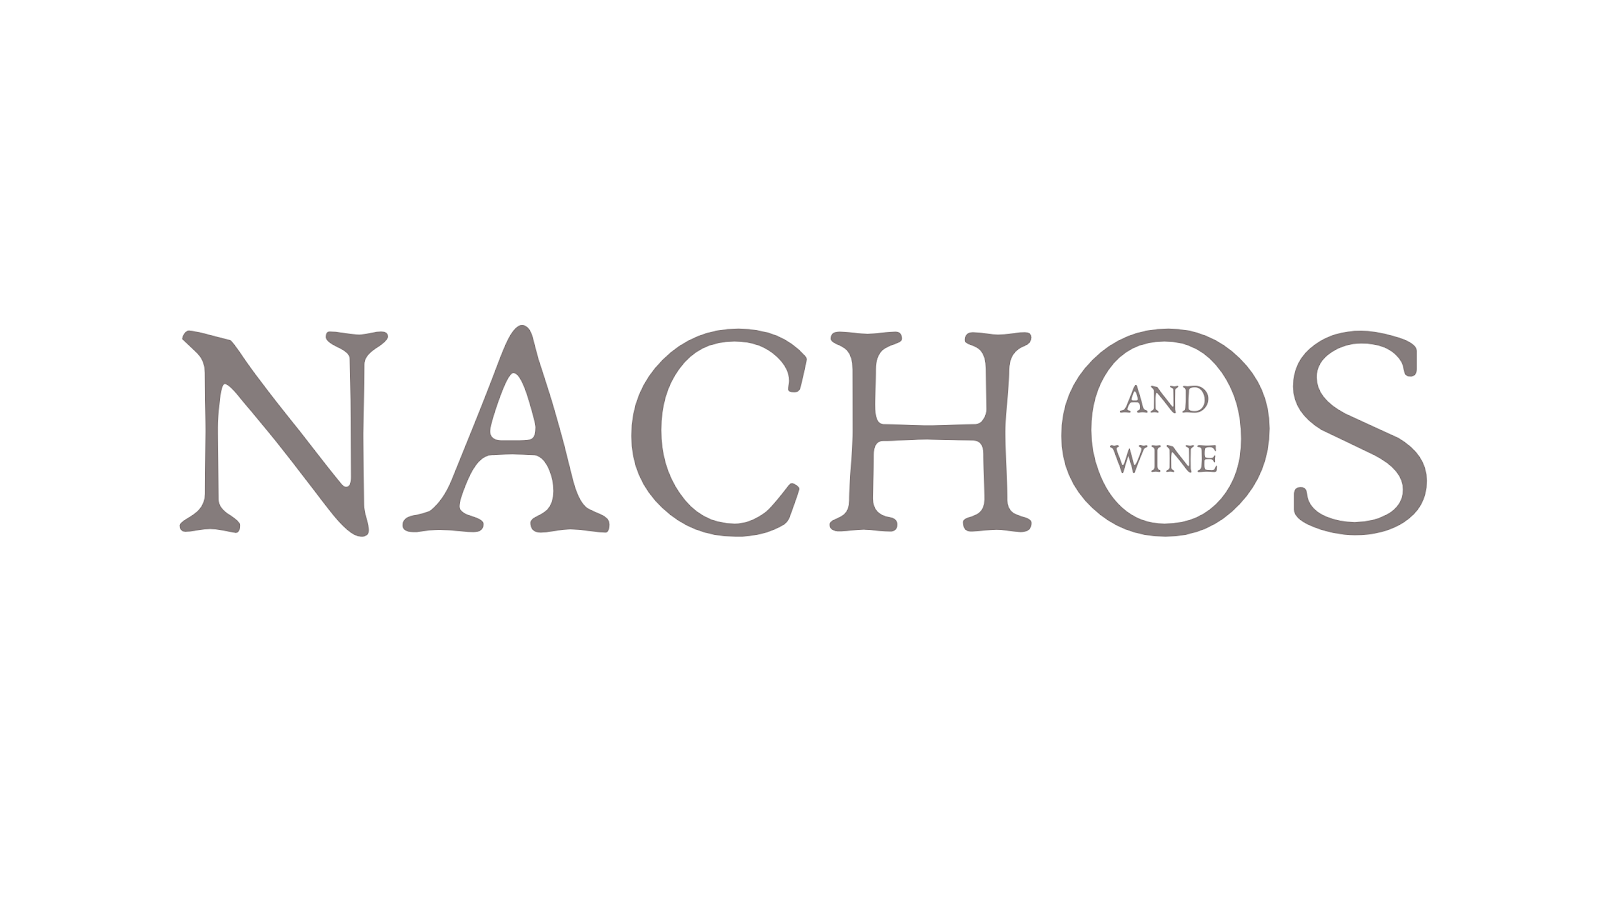 Nachos and Wine